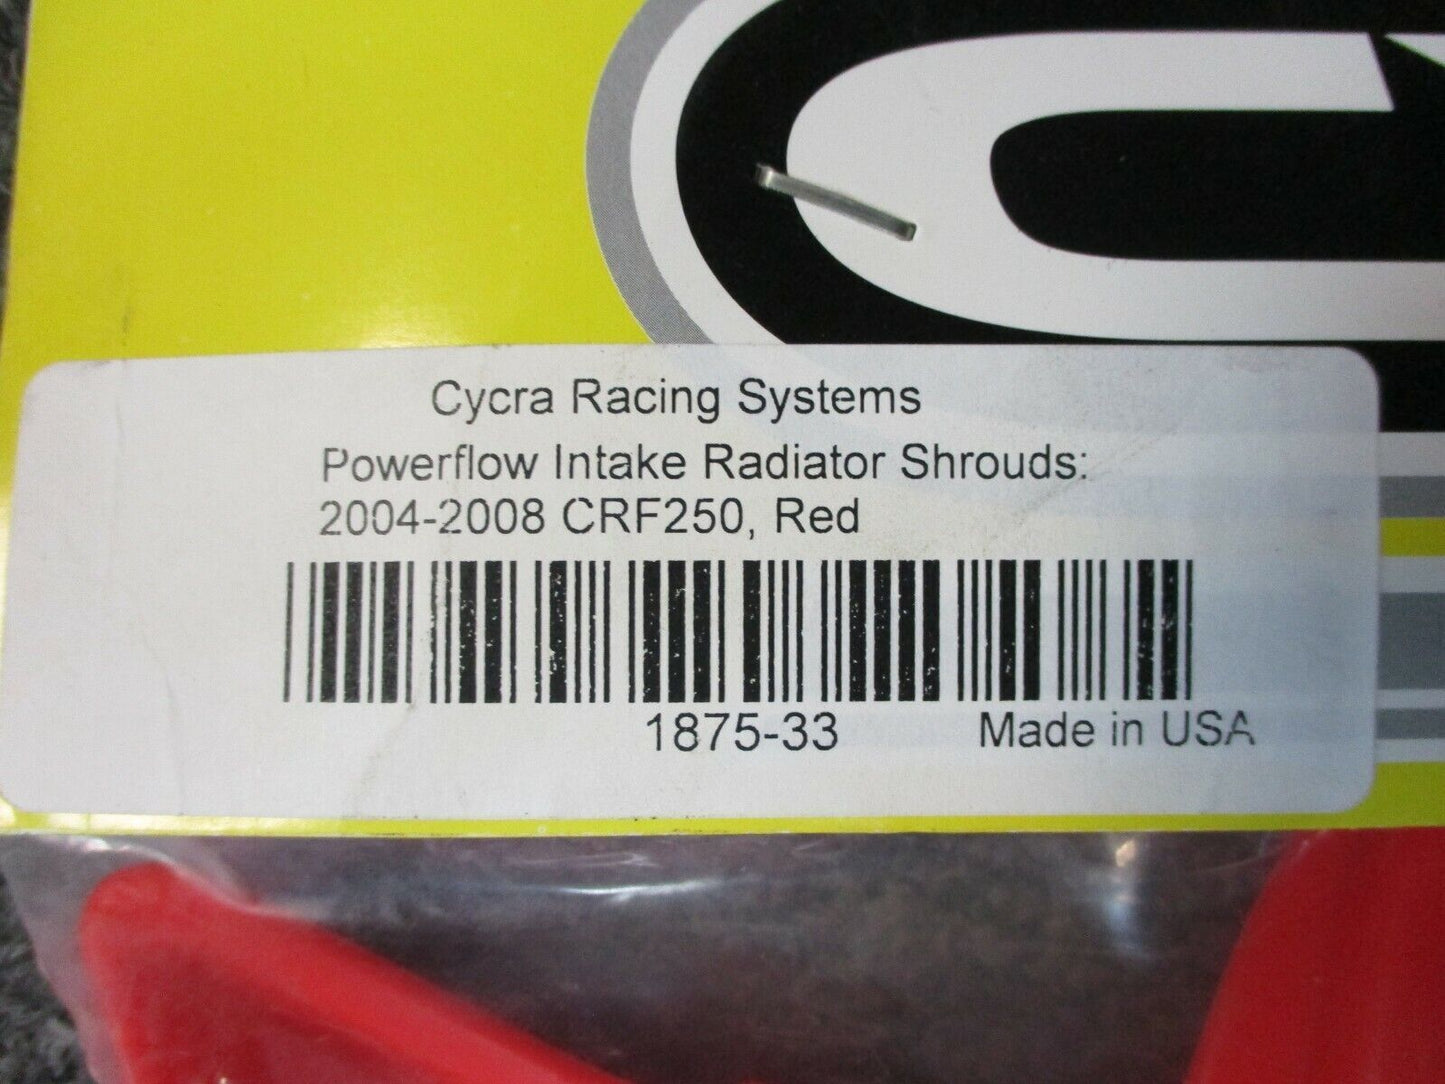 Honda CFR250 Red 04-08 Powerflow Intake Radiator Shrouds By CYCRA 1875-33